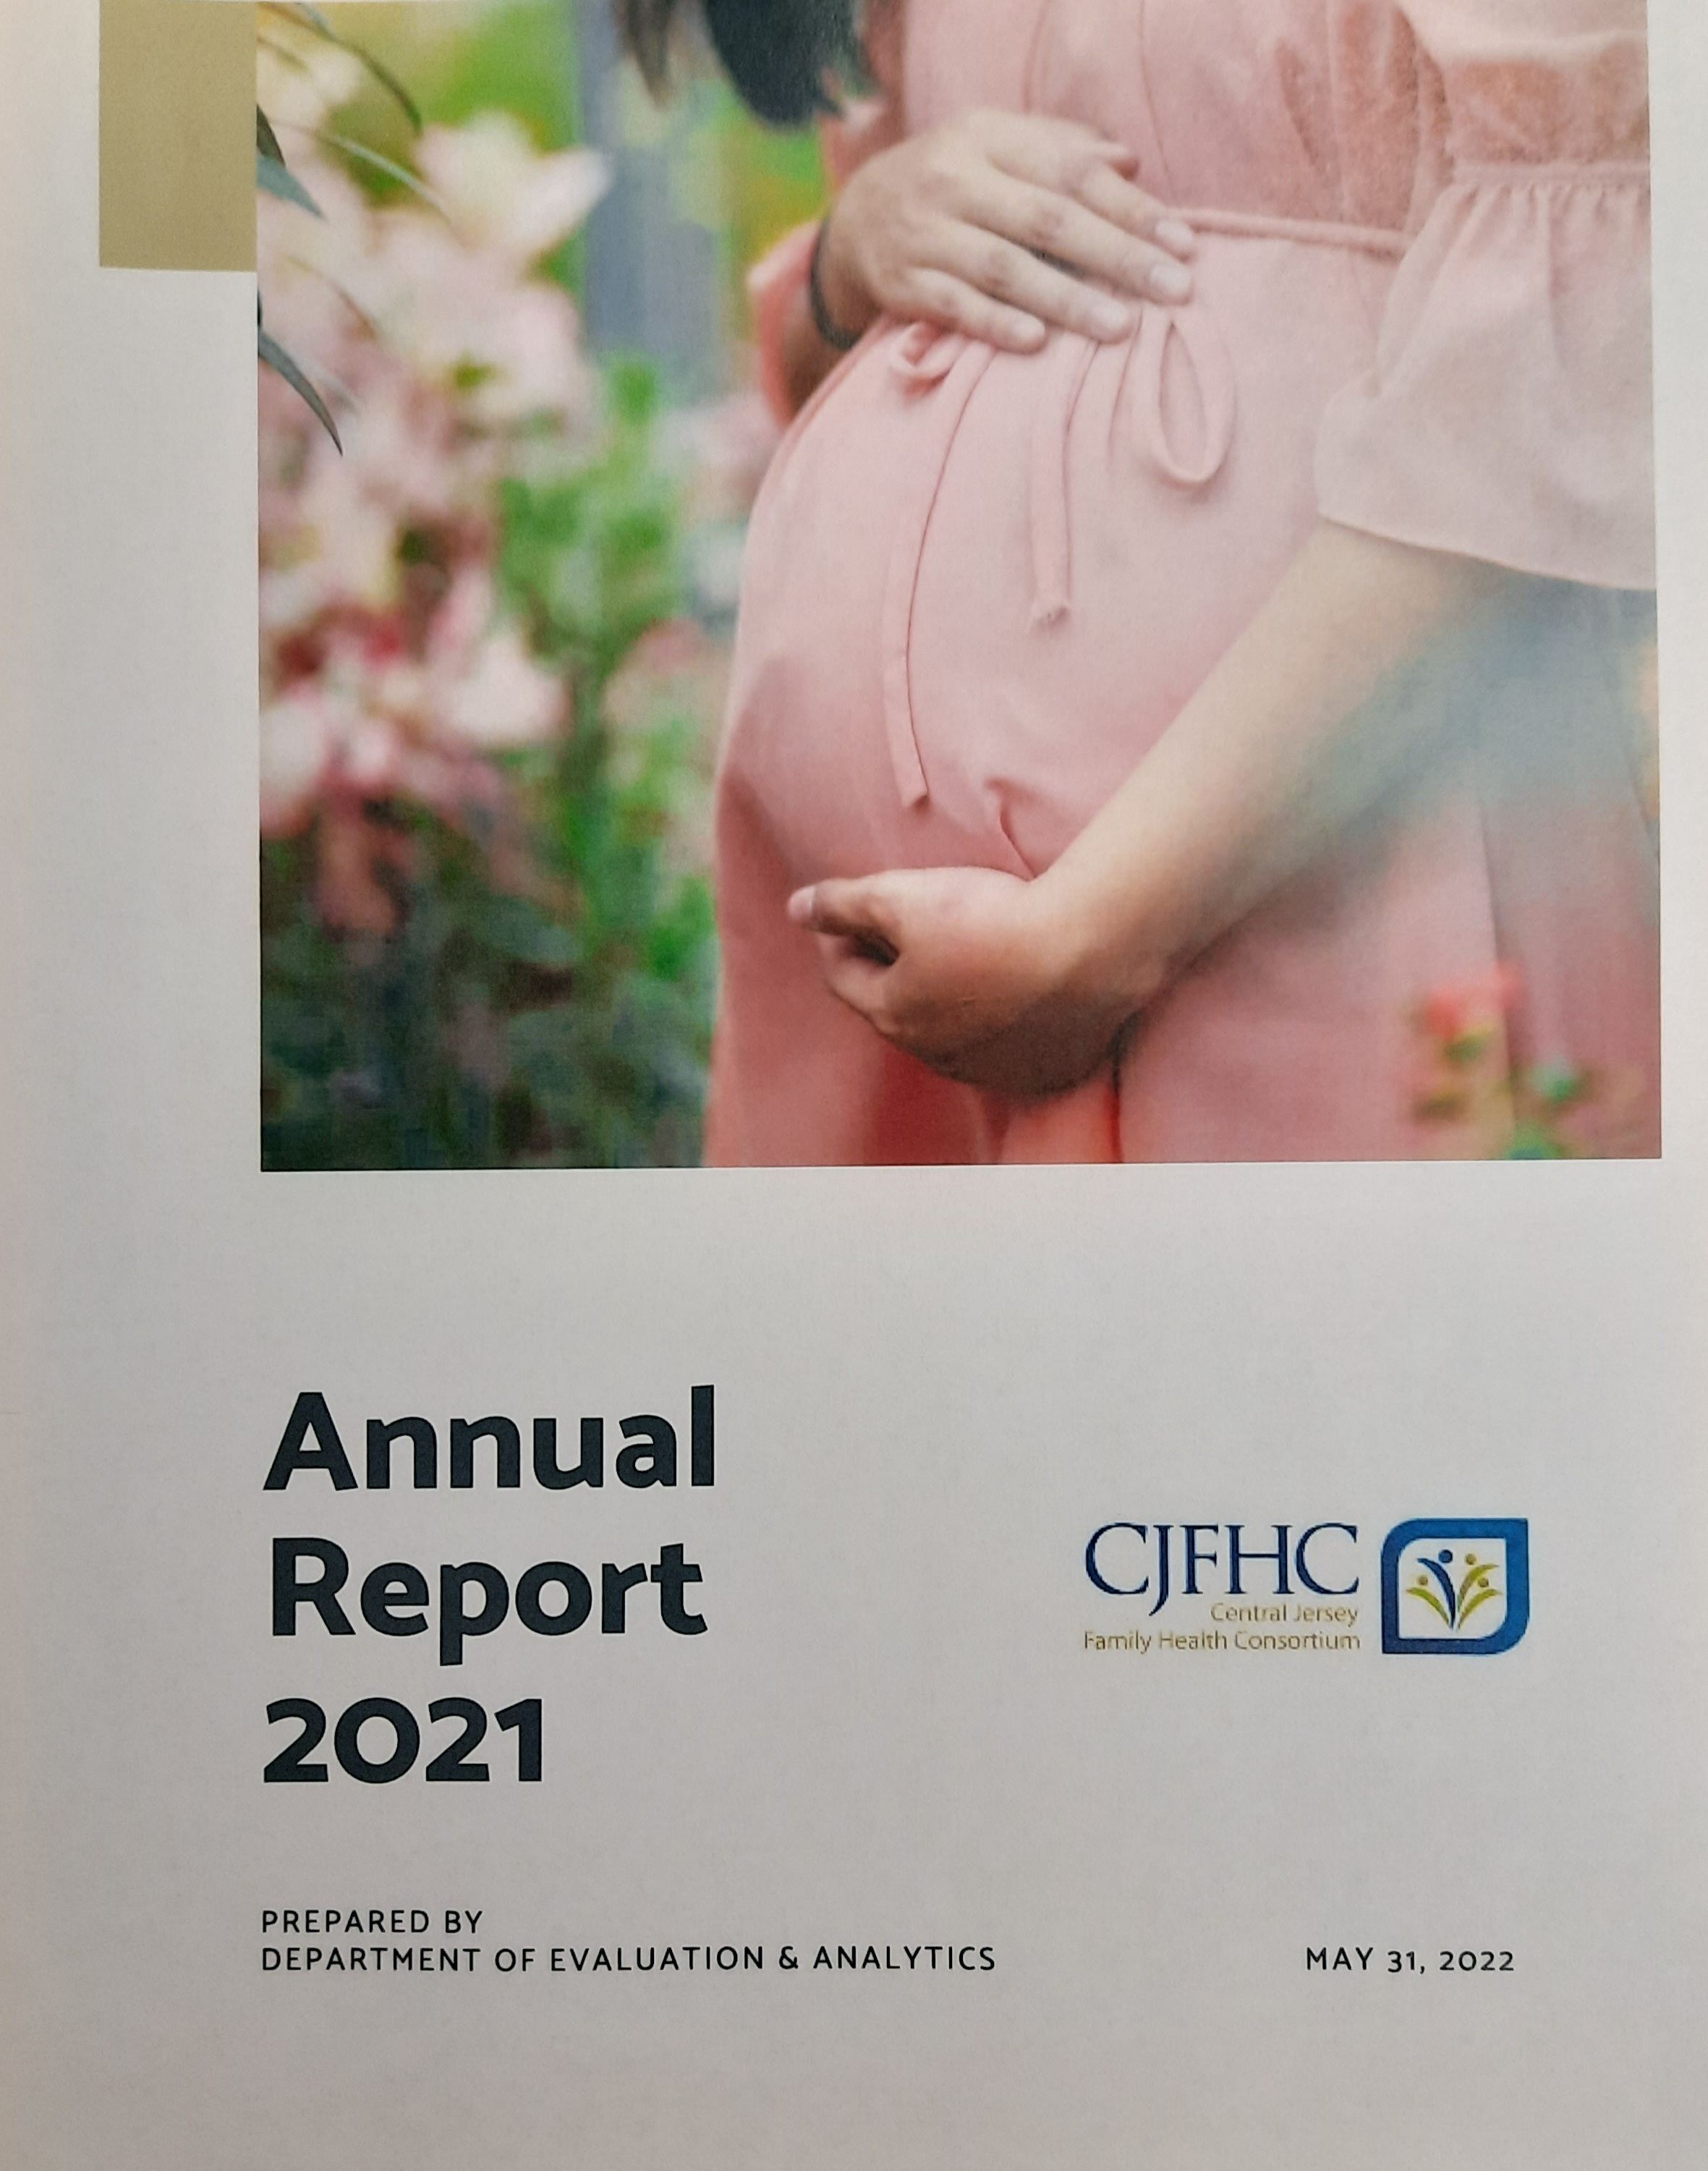 CJFHC Annual Report, 2021